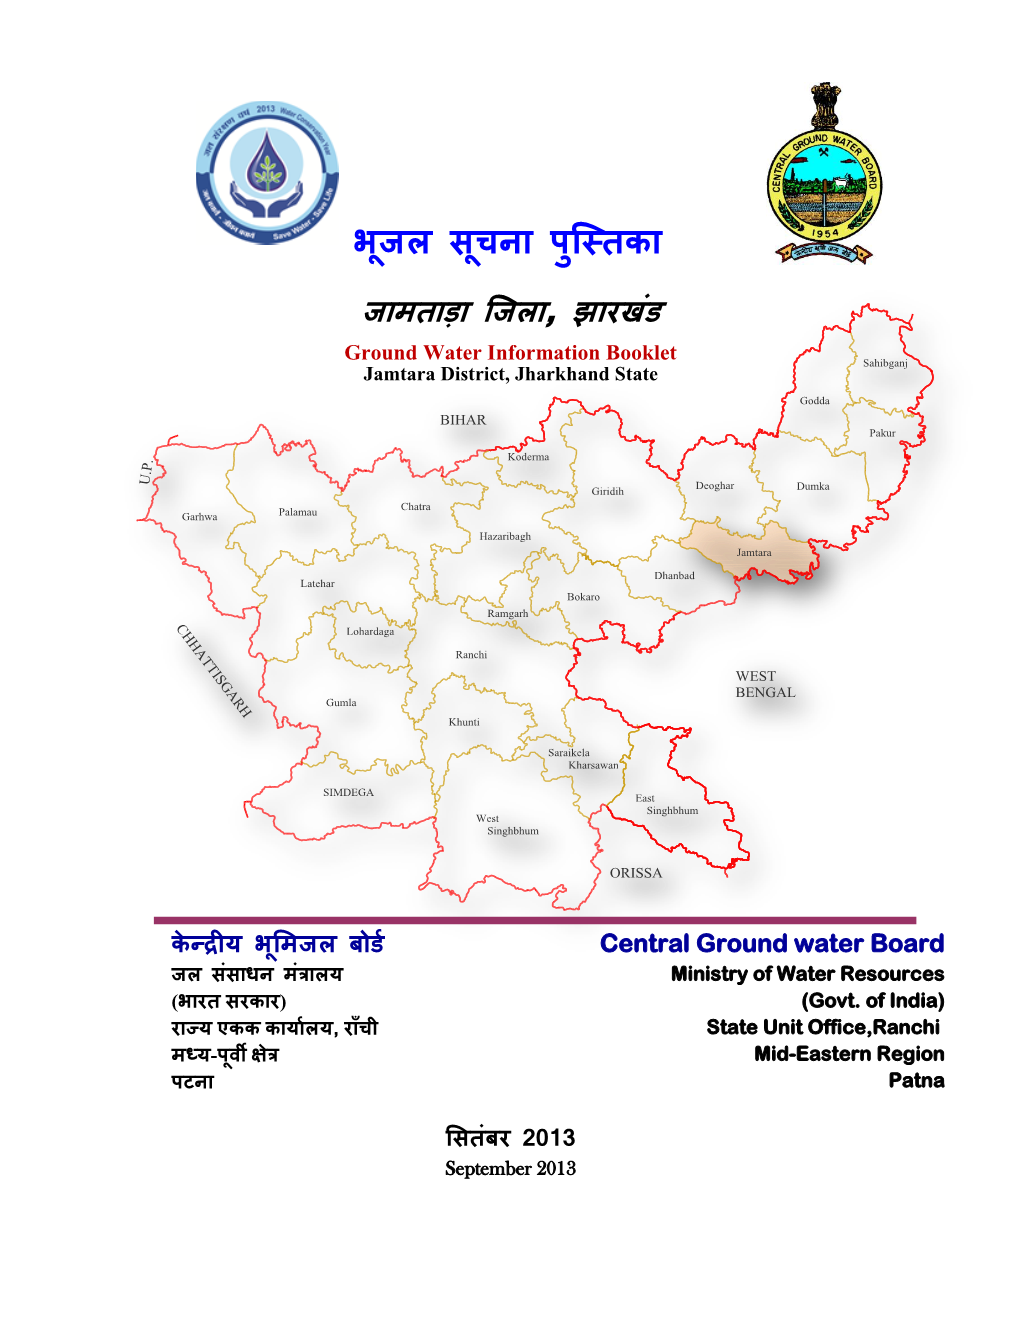 Jamtara District, Jharkhand State Godda BIHAR Pakur Koderma U.P